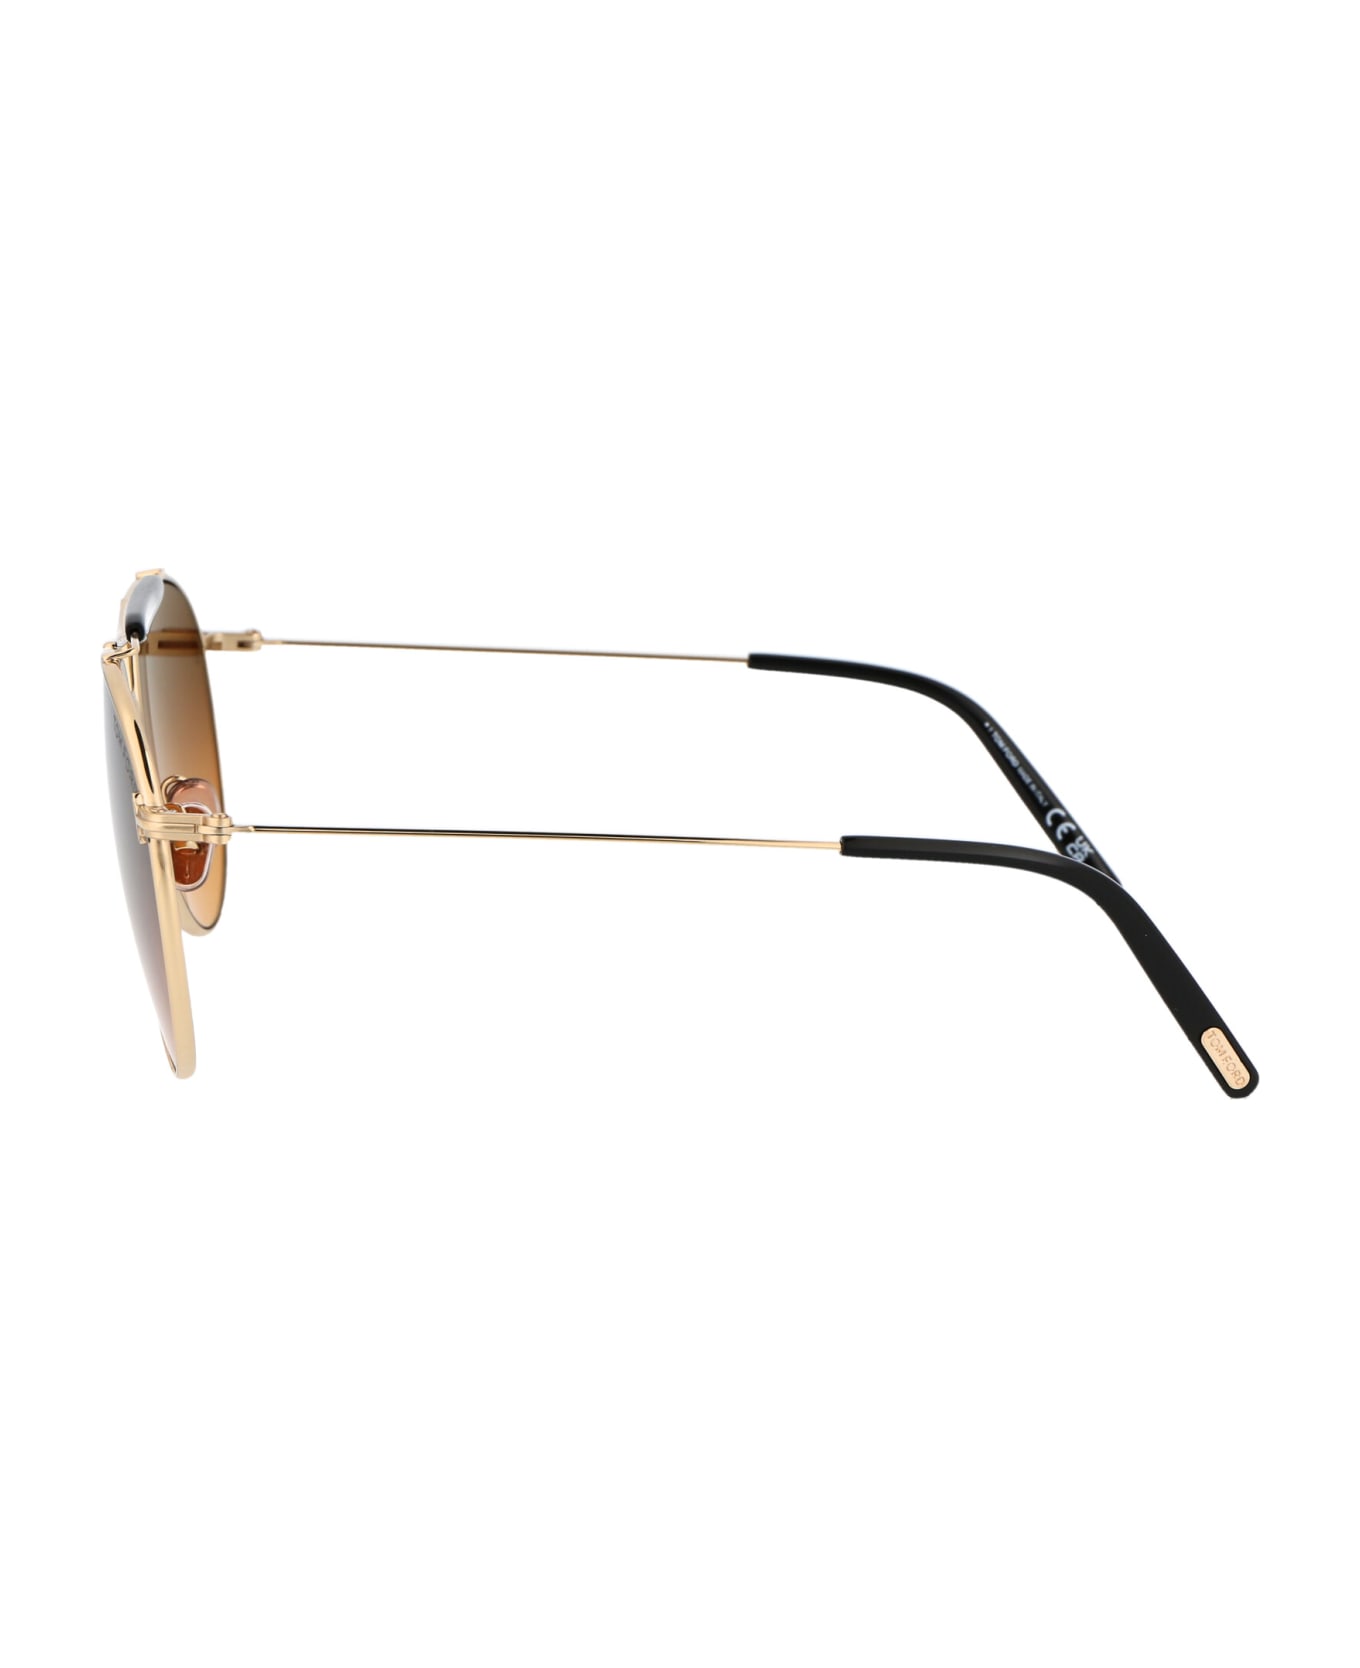 Tom Ford Eyewear Ft0995 Sunglasses - 32E GOLD